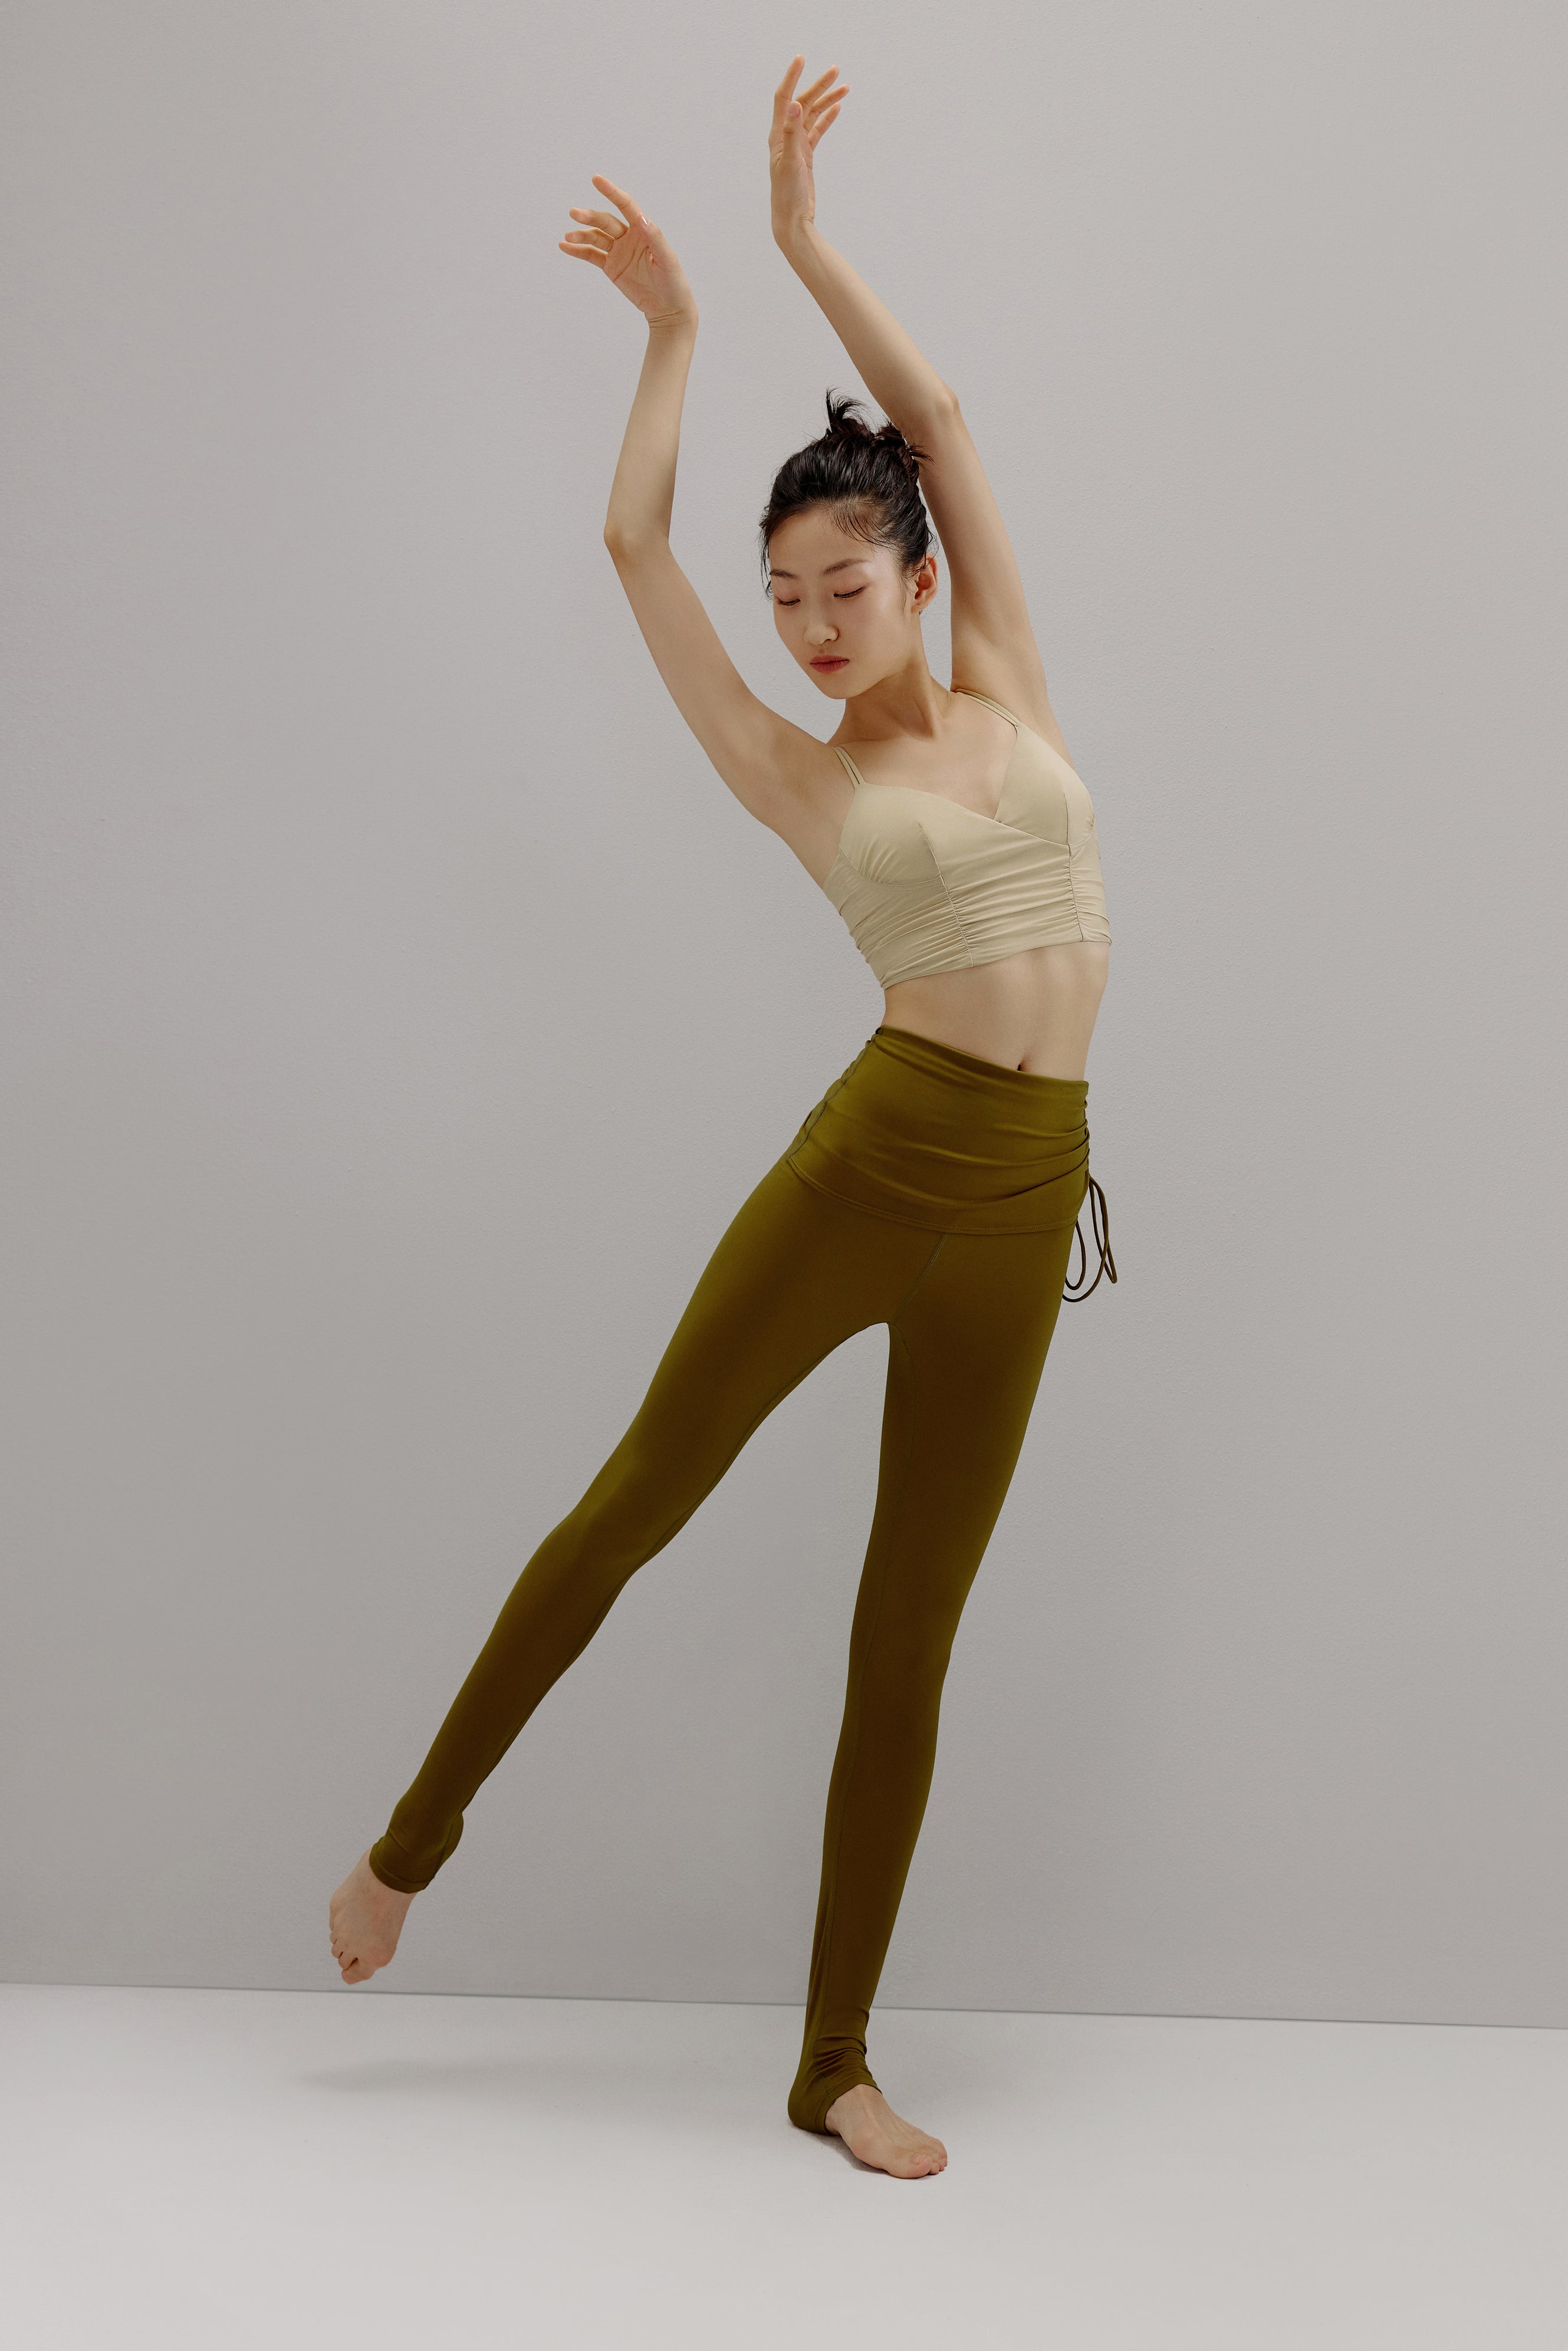 Silky Ladies Stretchy Stirrup Tights |Dancewear Central (SILKMATT)